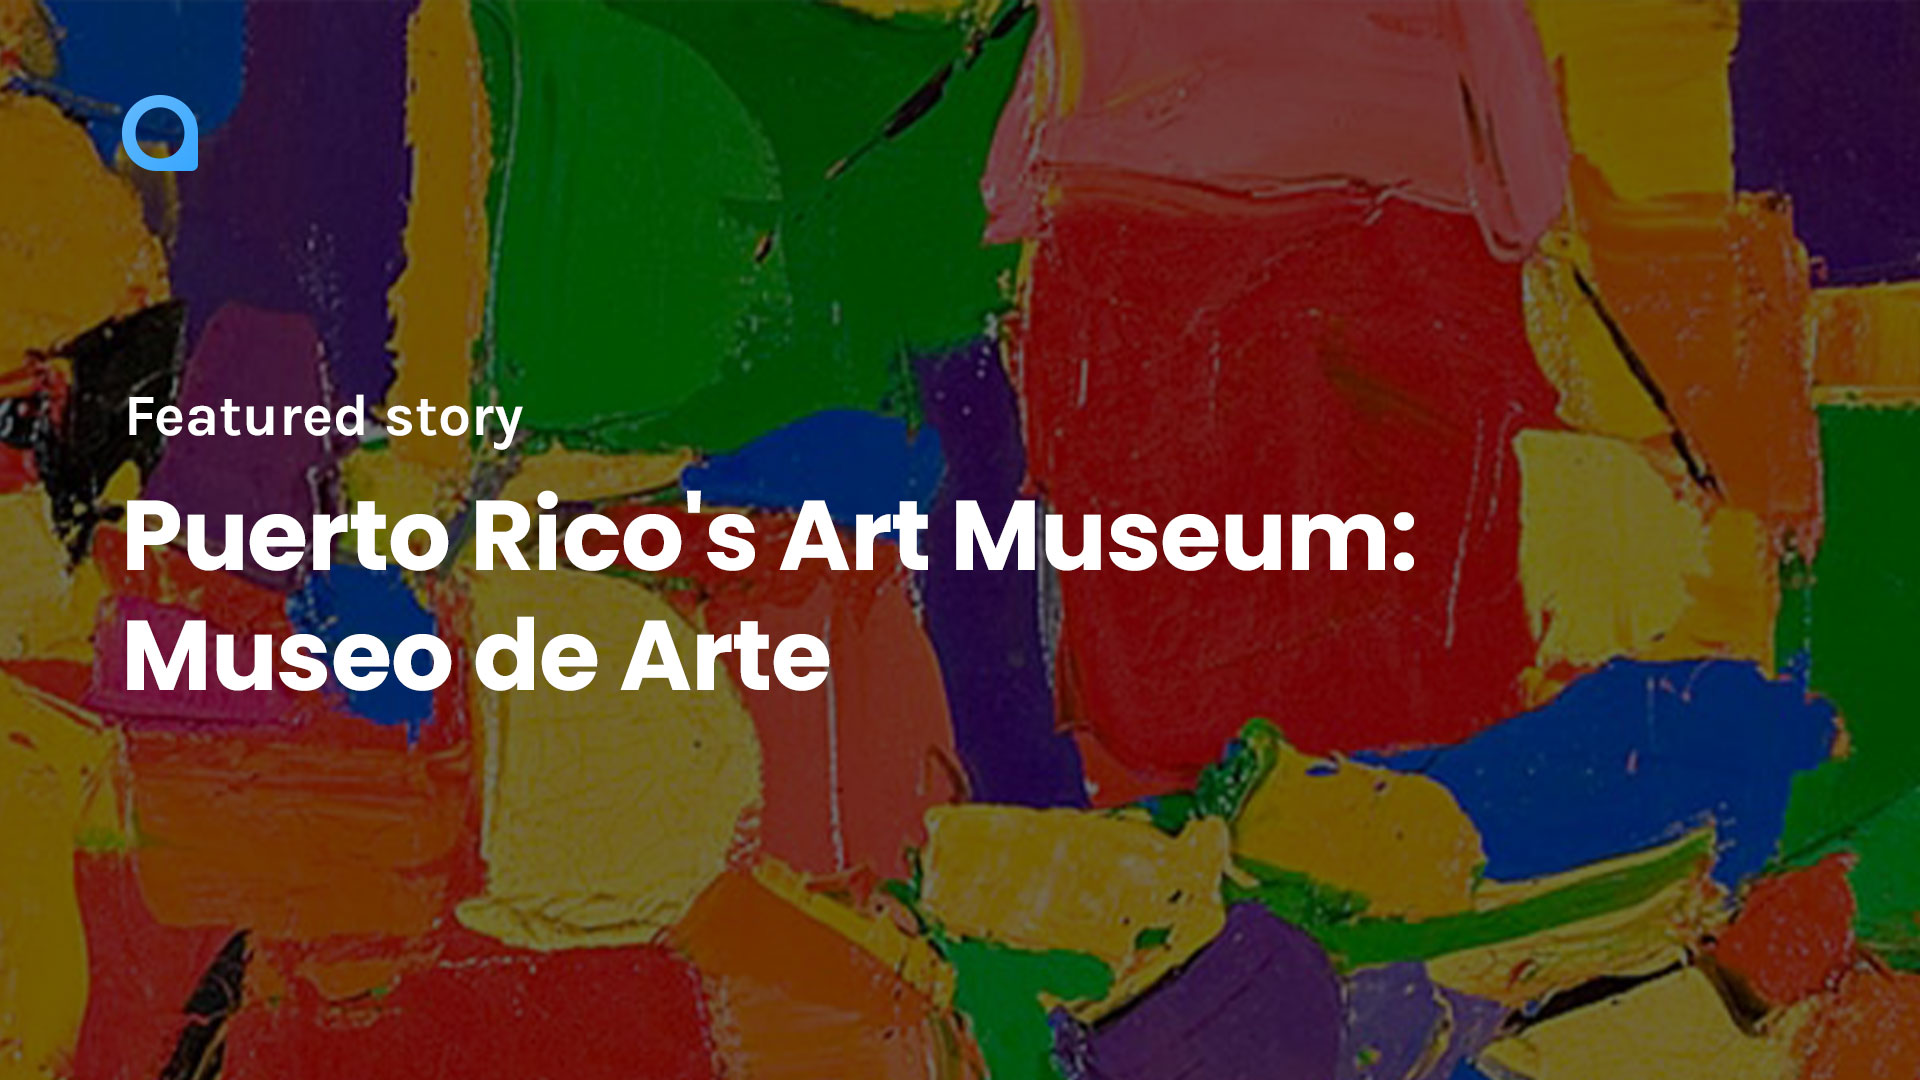 Puerto Rico's Art Museum: Museo de Arte